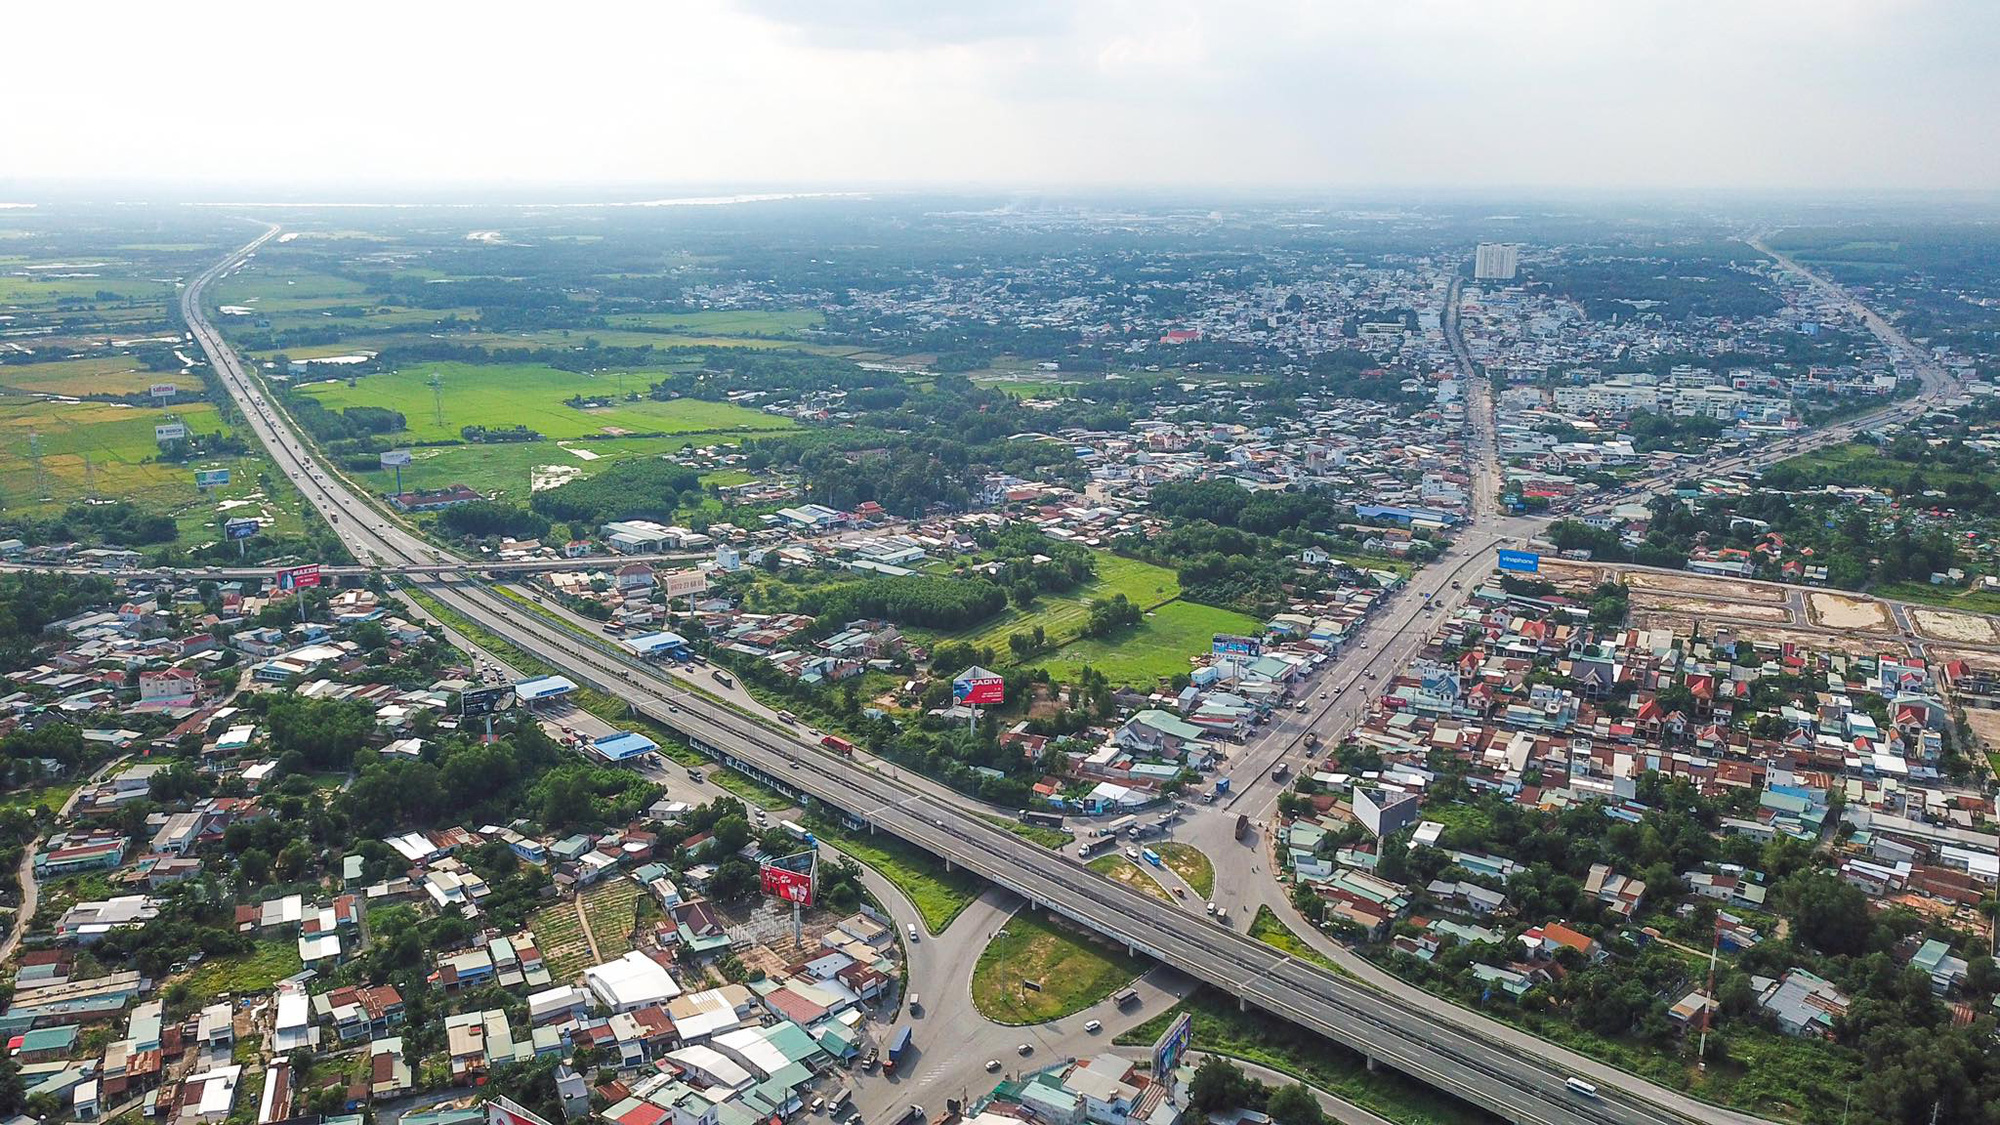 Transport ministry approves expansion of key expressway linking Saigon, Dong Nai